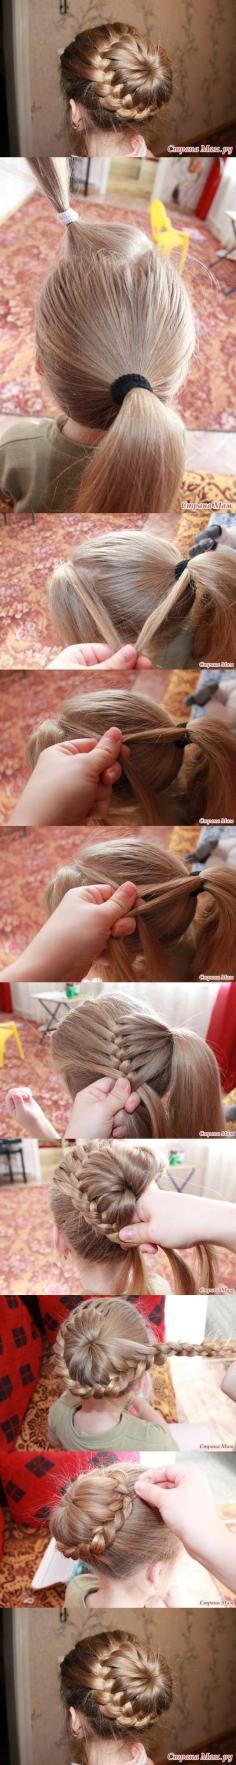 Easy french braid bun I LOVE this. We love braids for summer hairstyles! #braids #fashion #hairstyles